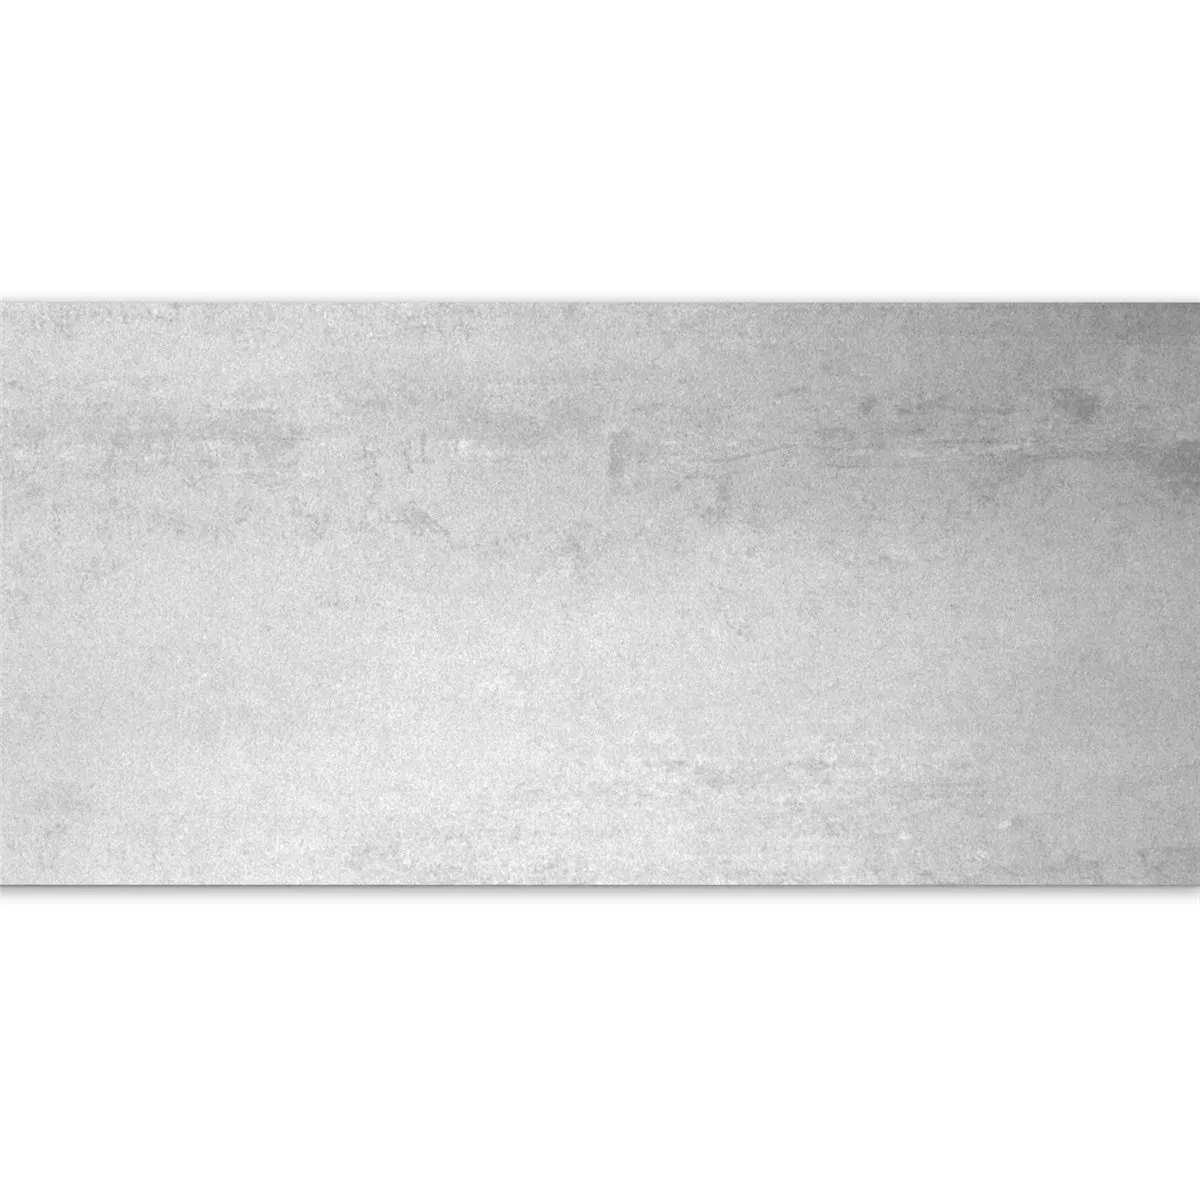 Плочки За Под Madeira Частично Полиран Бяло 30x60cm